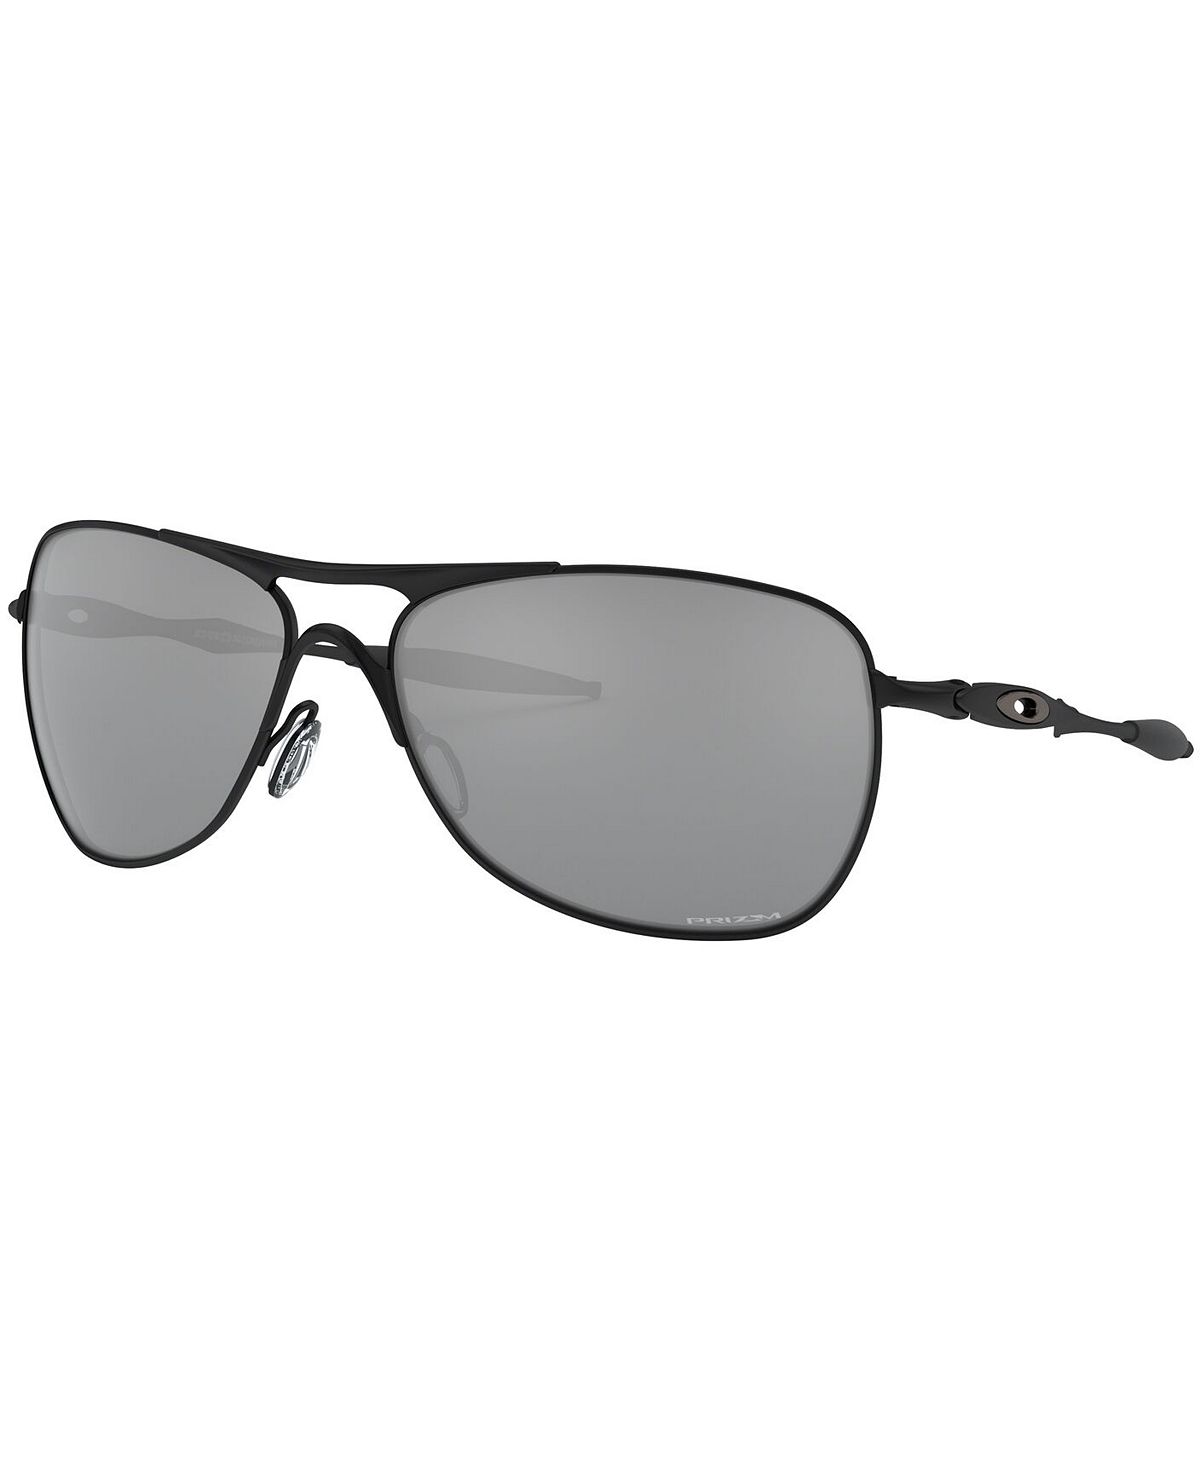 Солнцезащитные очки CROSSHAIR, OO4060 Oakley pfi 303mbk matte black 330 мл 2957b001